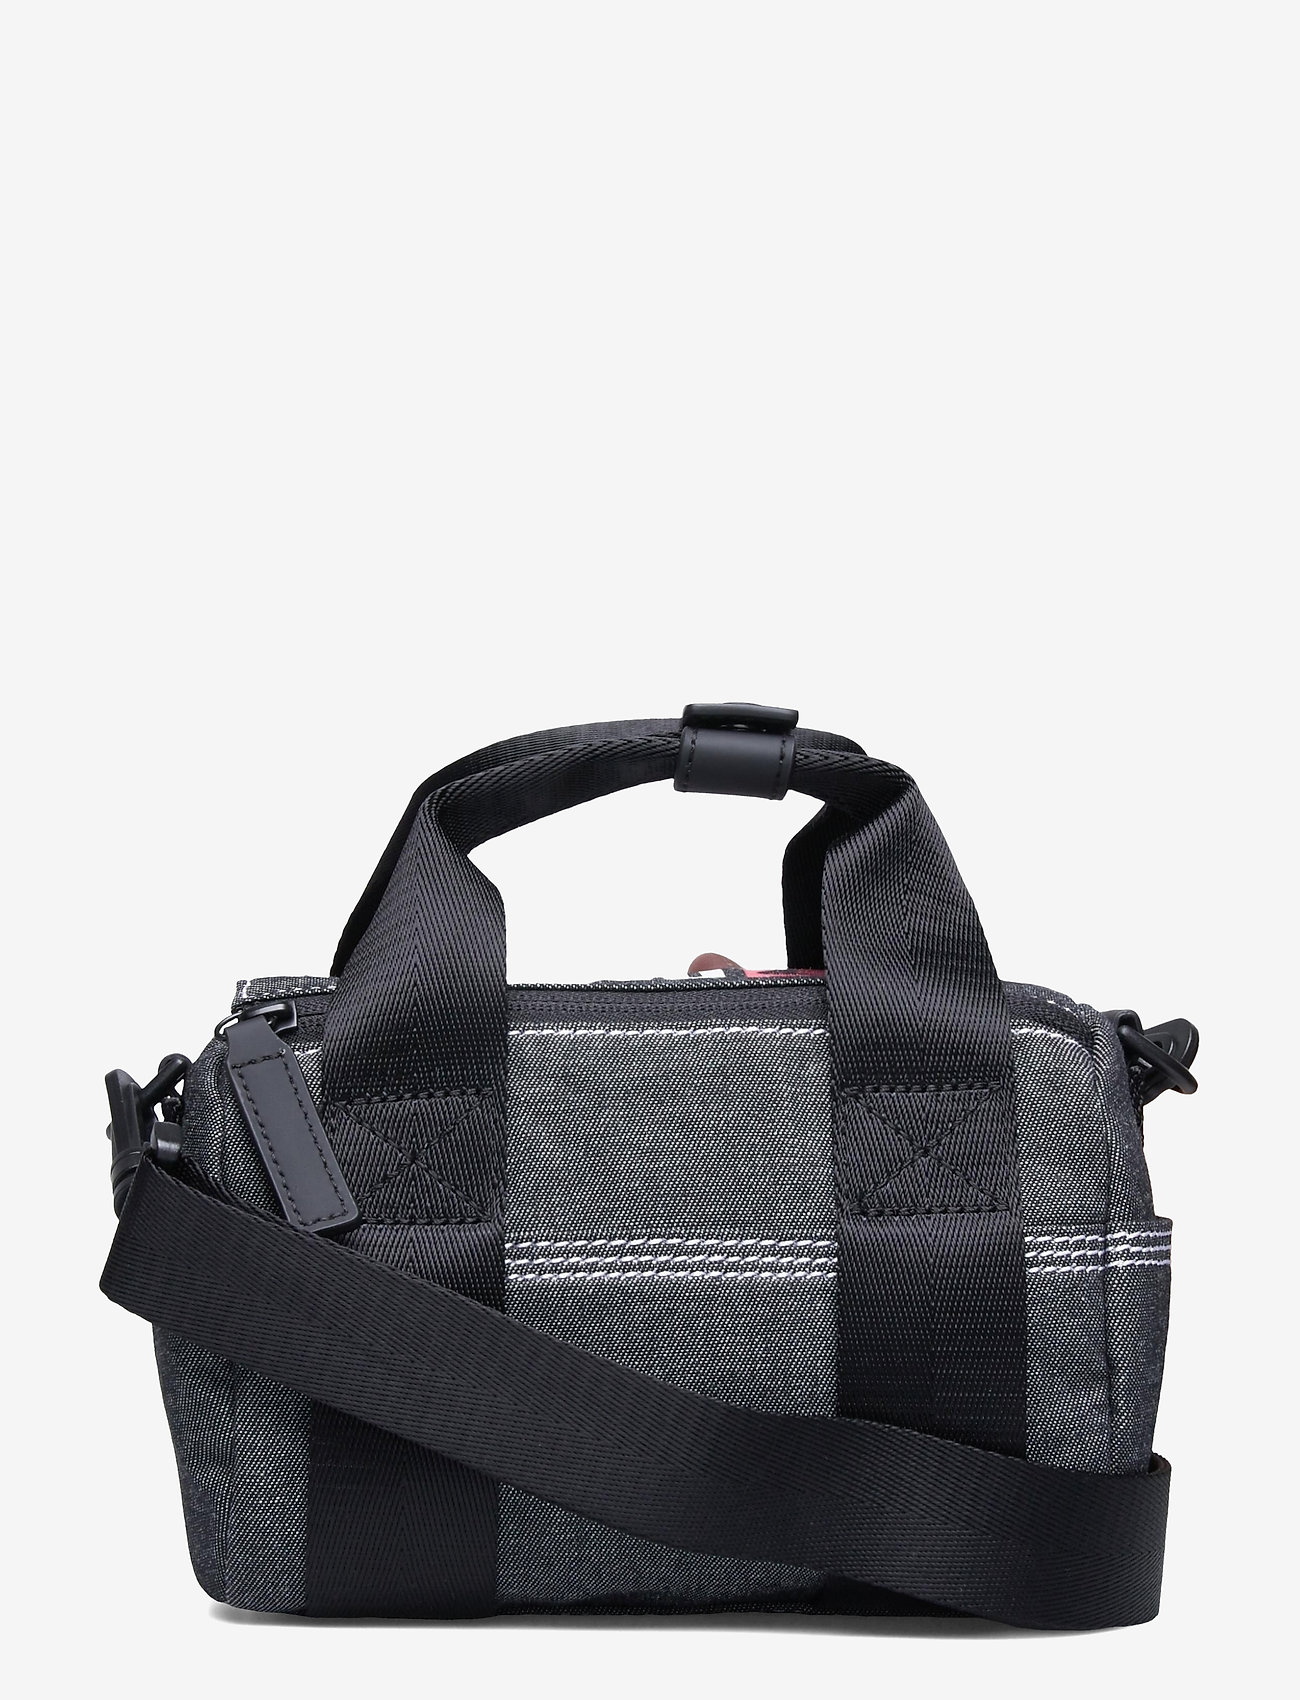 Diesel - MINI DUFFLE handbag - sportsvesker - black denim - 0